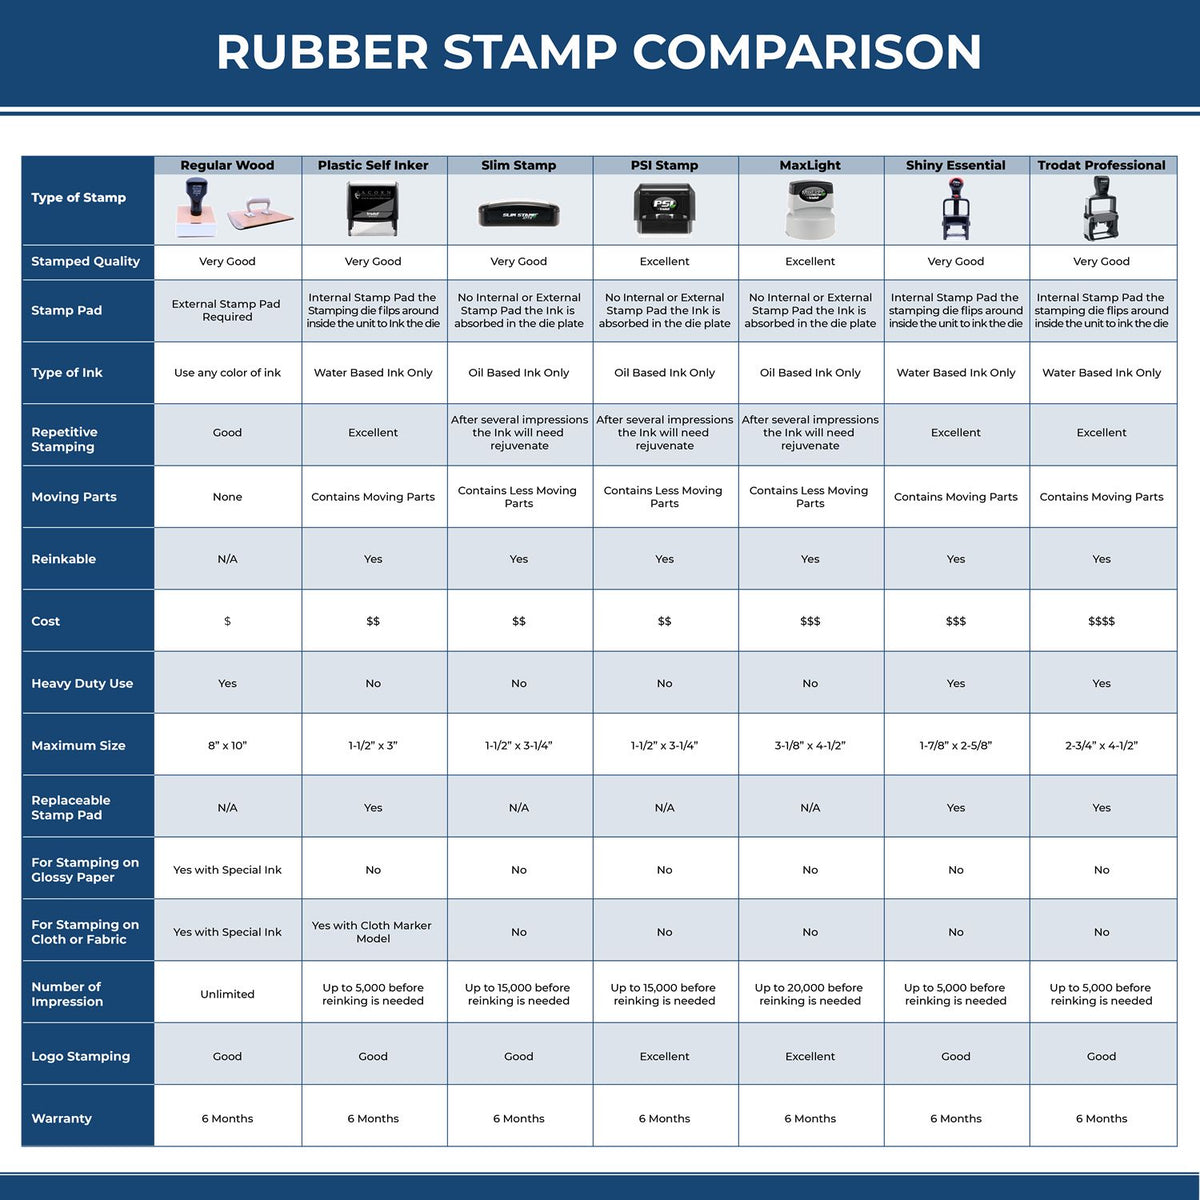 Large Hmo Ppo Rubber Stamp 4546R Rubber Stamp Comparison